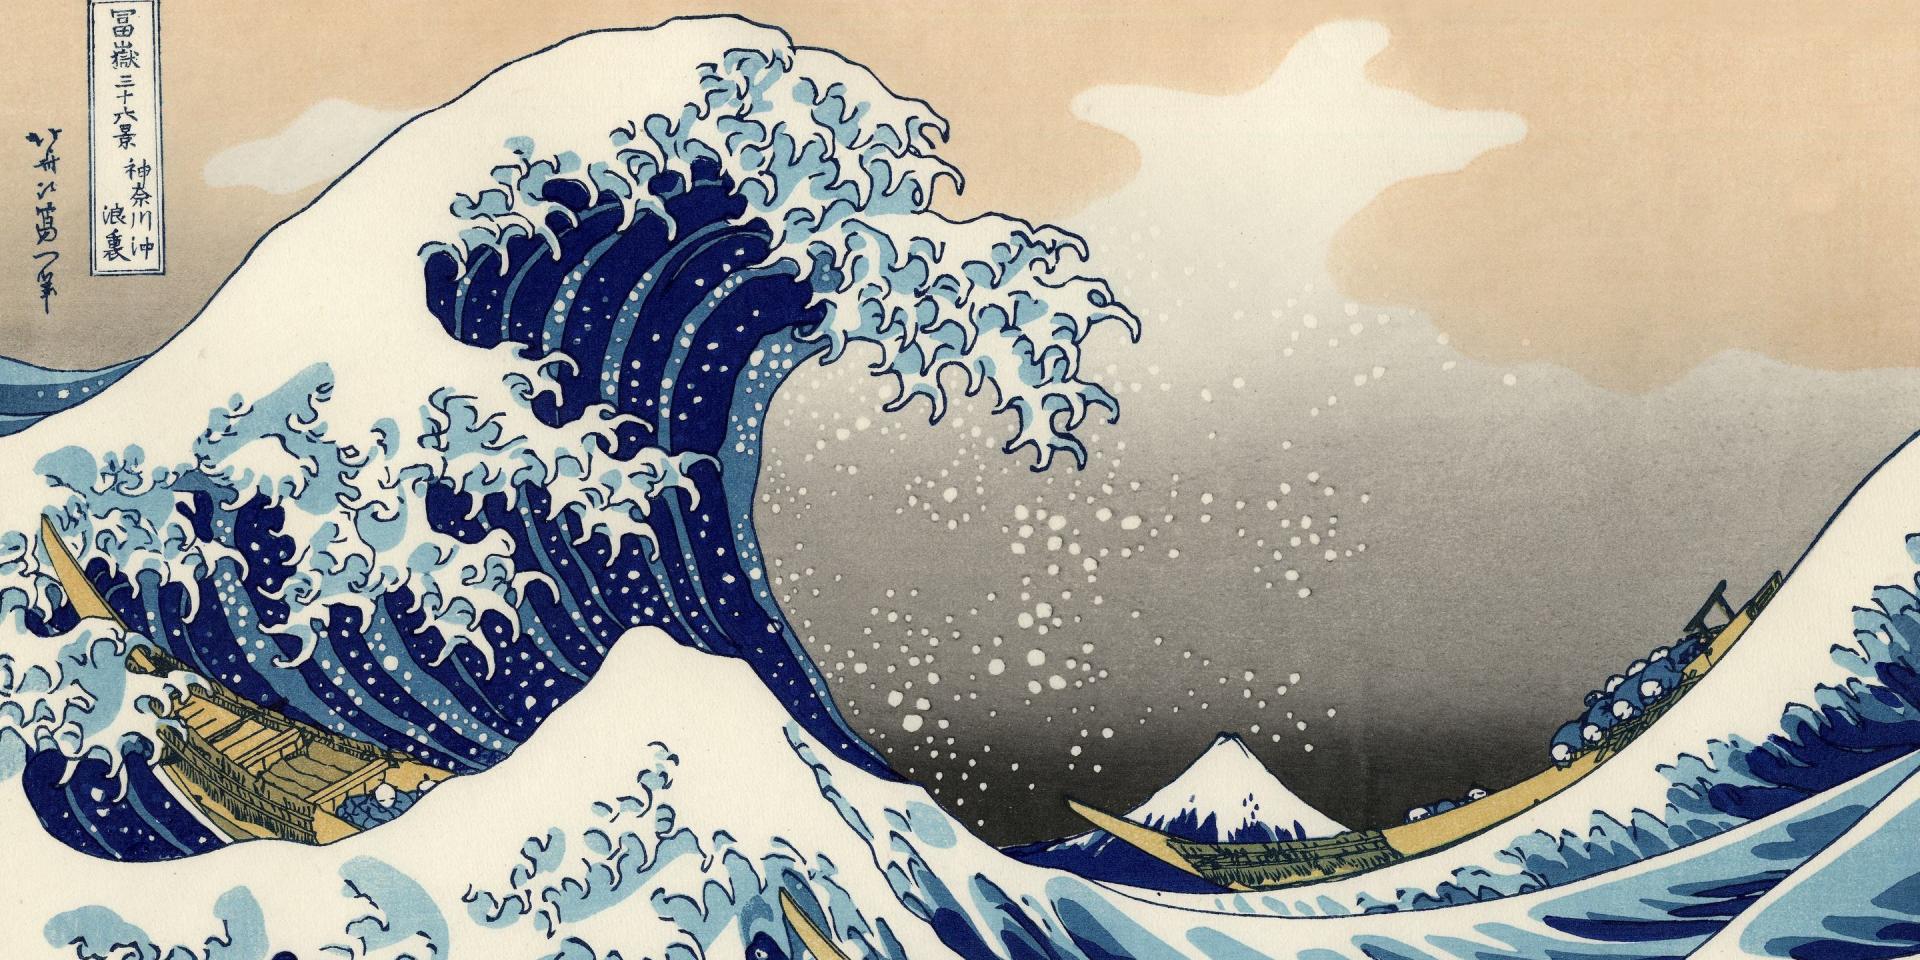 Katsushika Hokusai (1760-1849), The Great Wave off Kanagawa 1830-1831